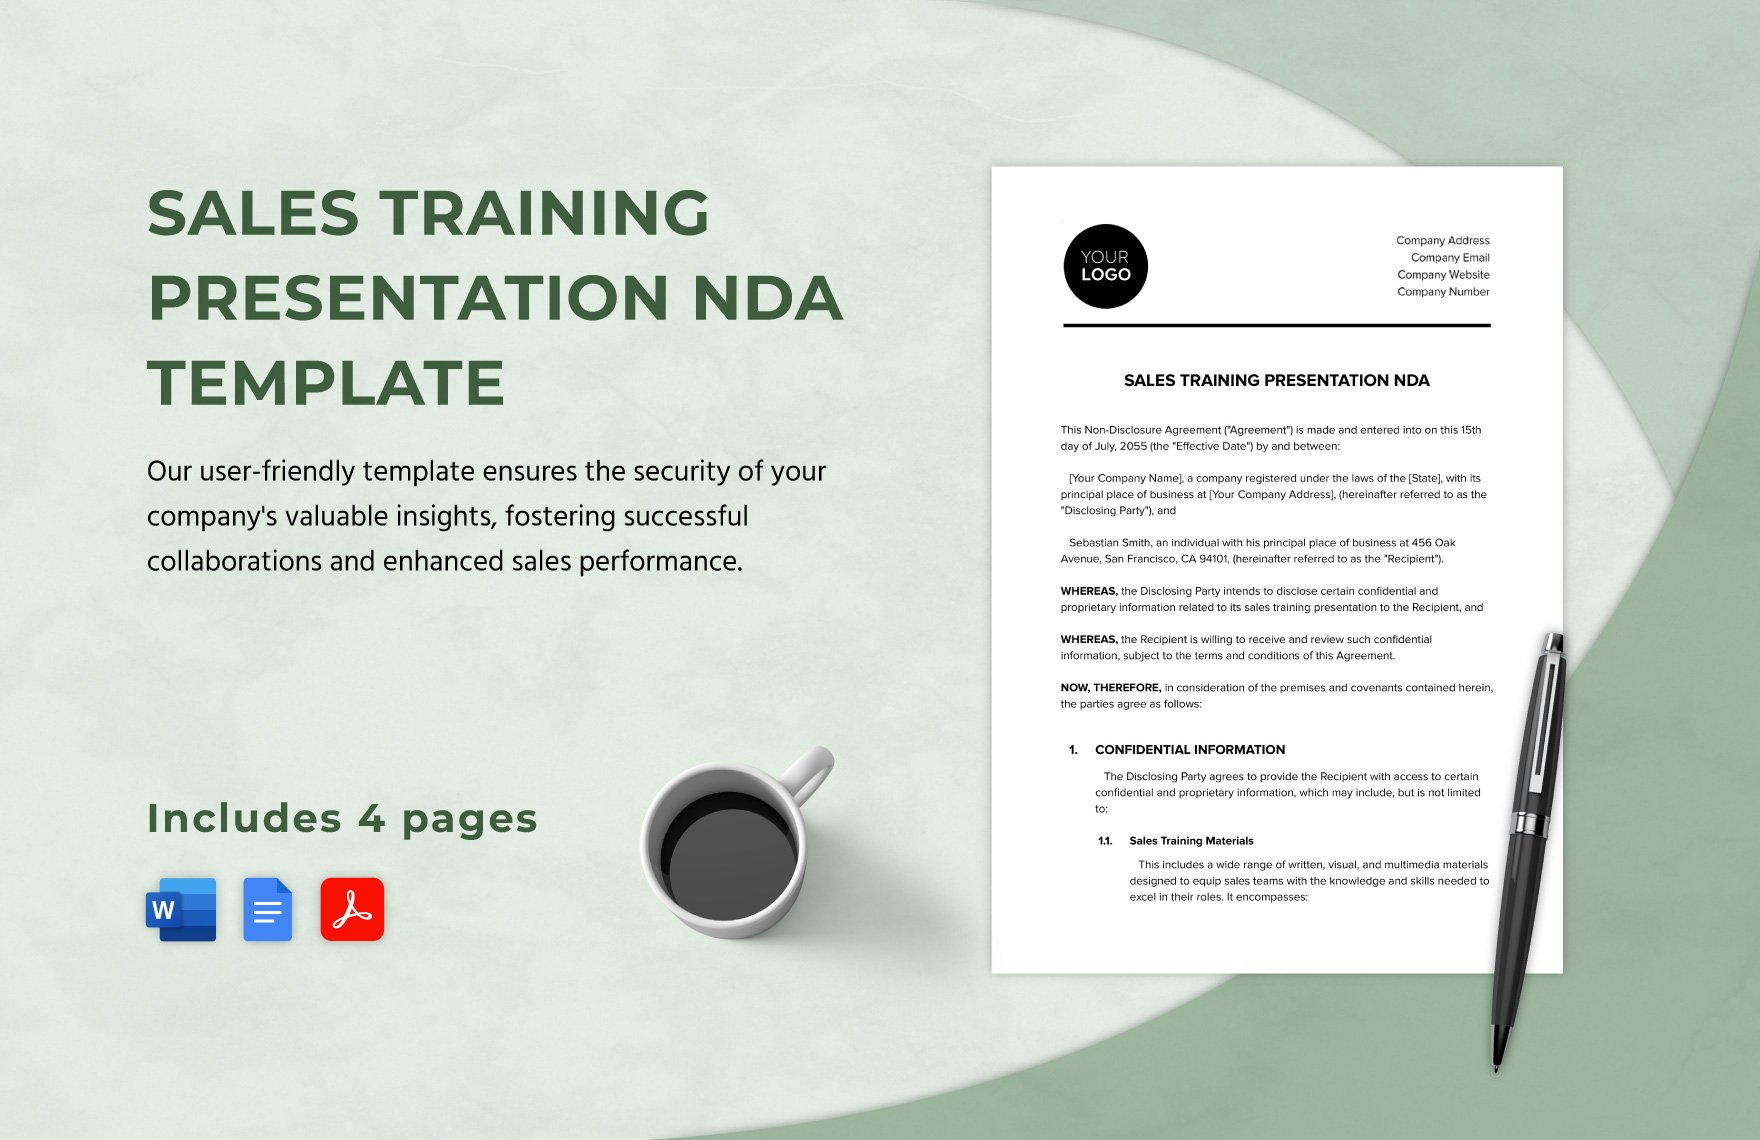 Sales Training Presentation NDA Template